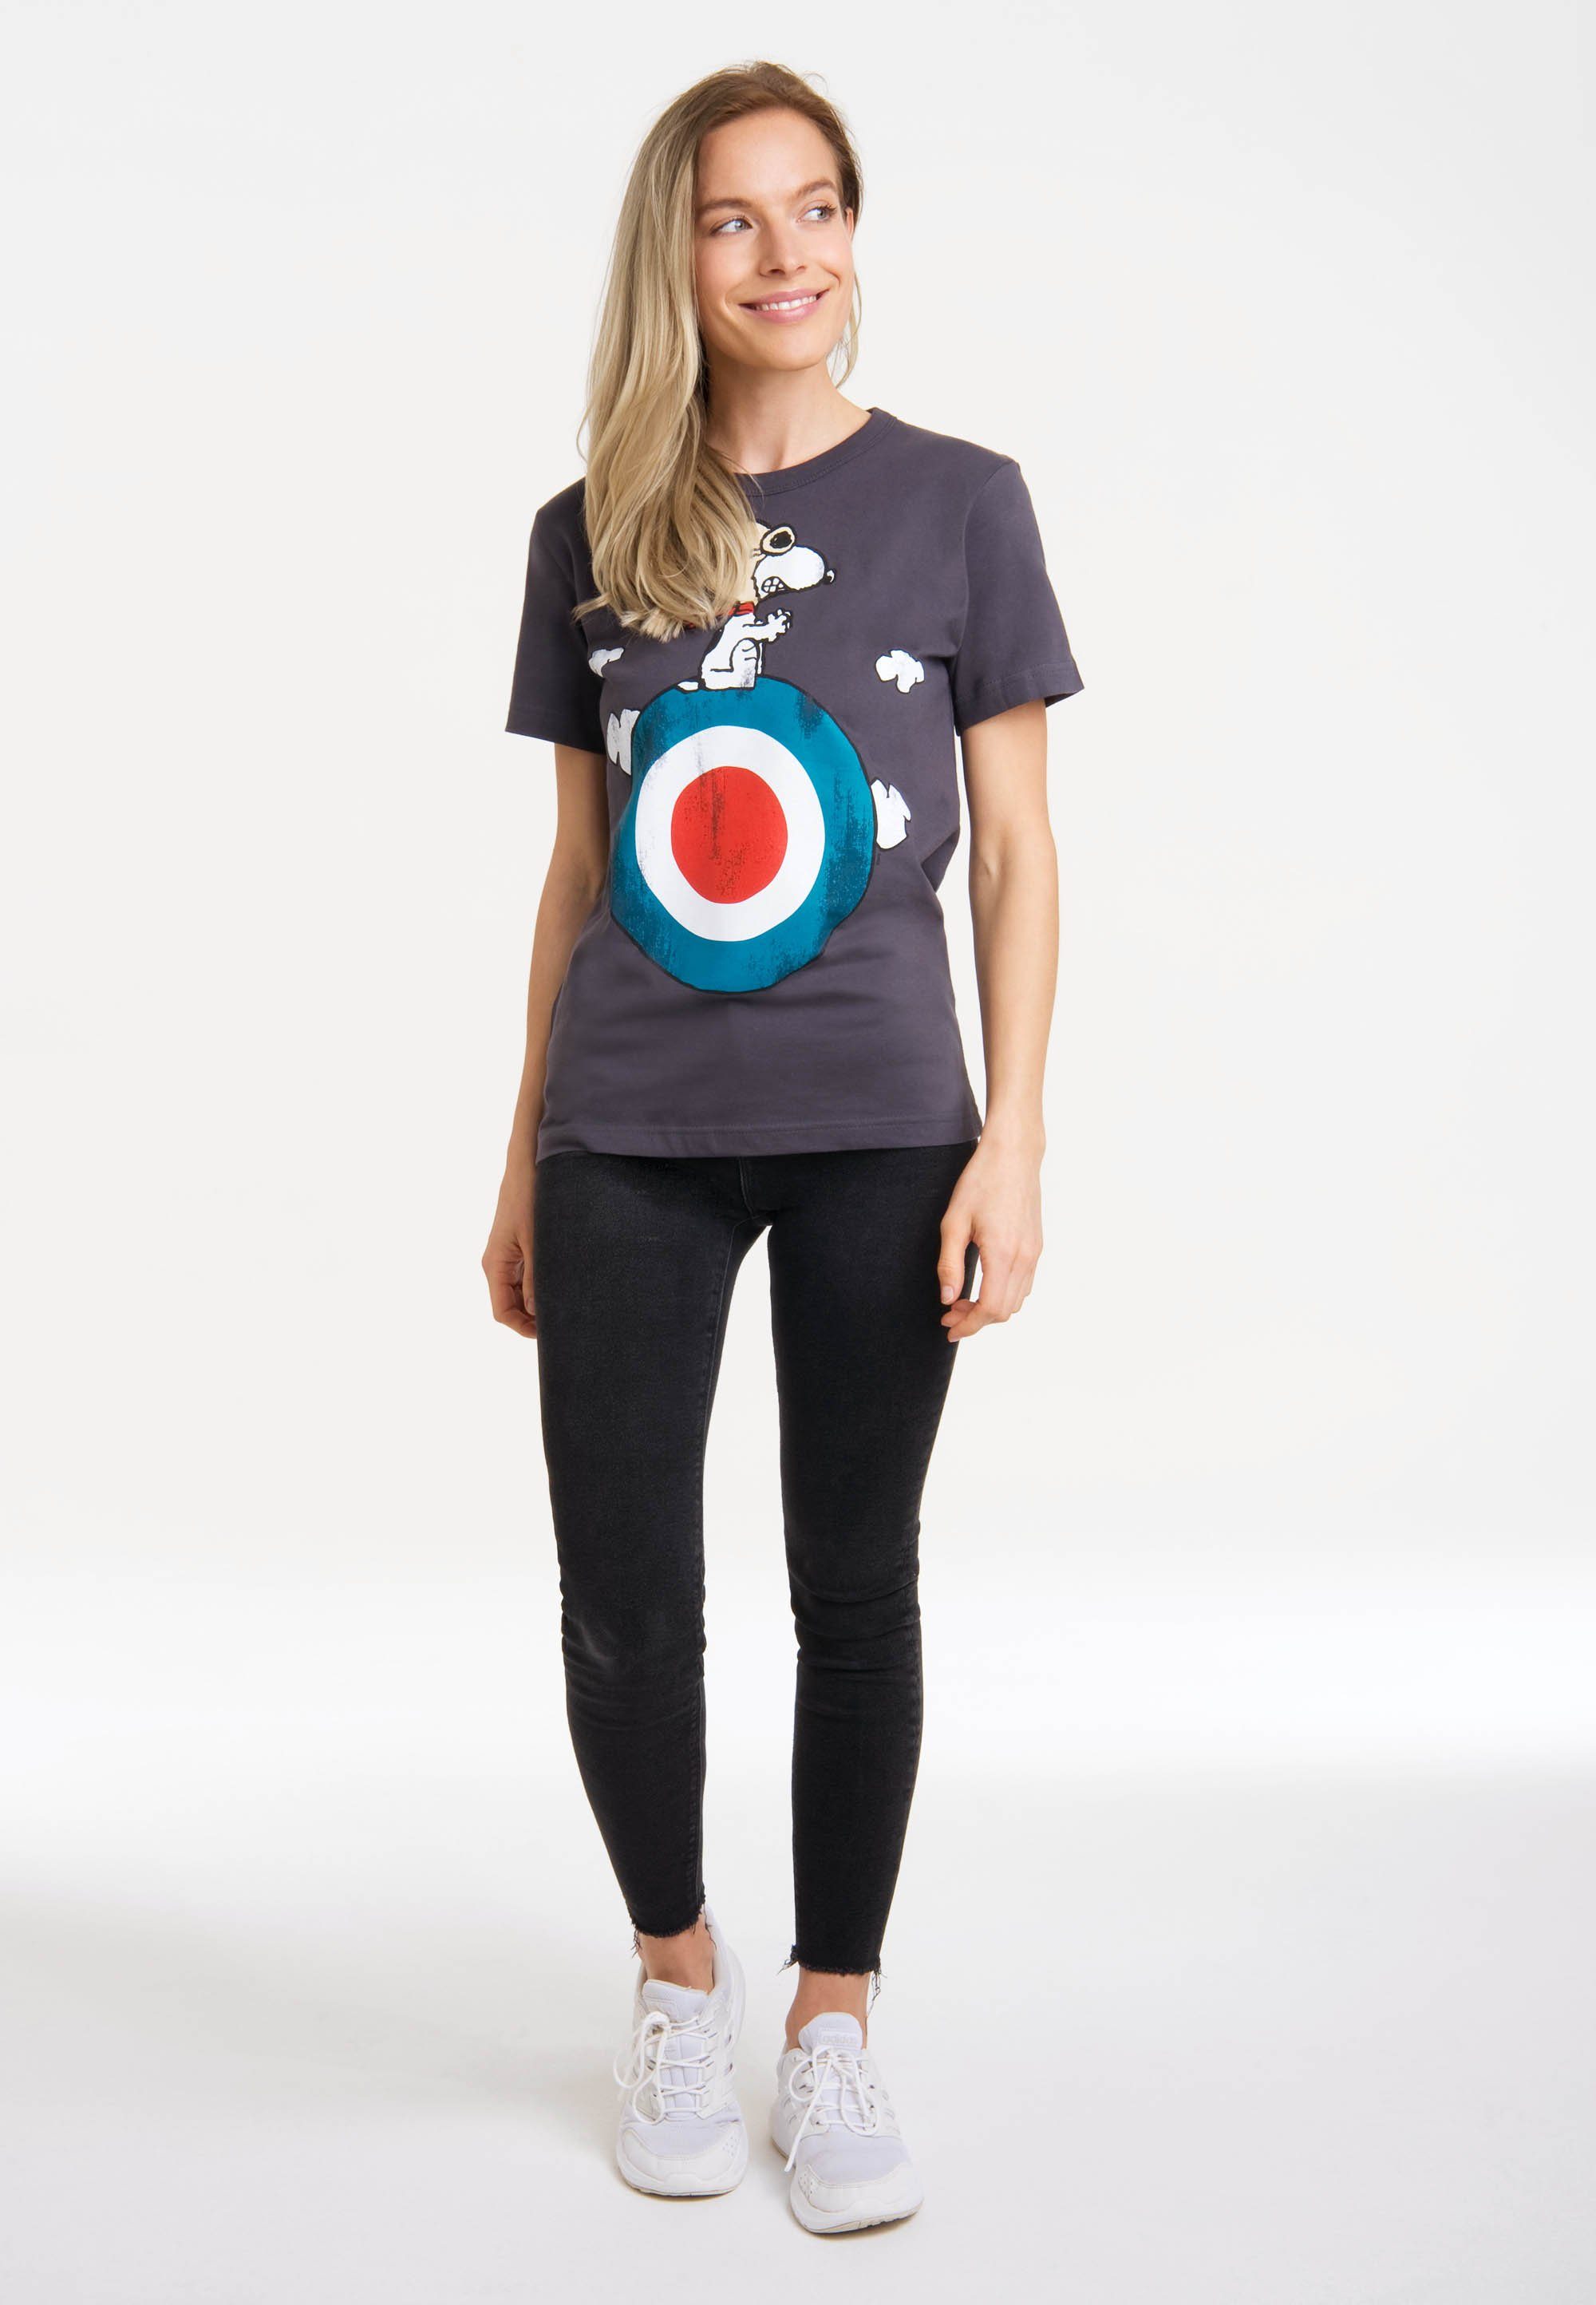 LOGOSHIRT T-Shirt Peanuts mit Snoopy - blau-grau Print lizenziertem